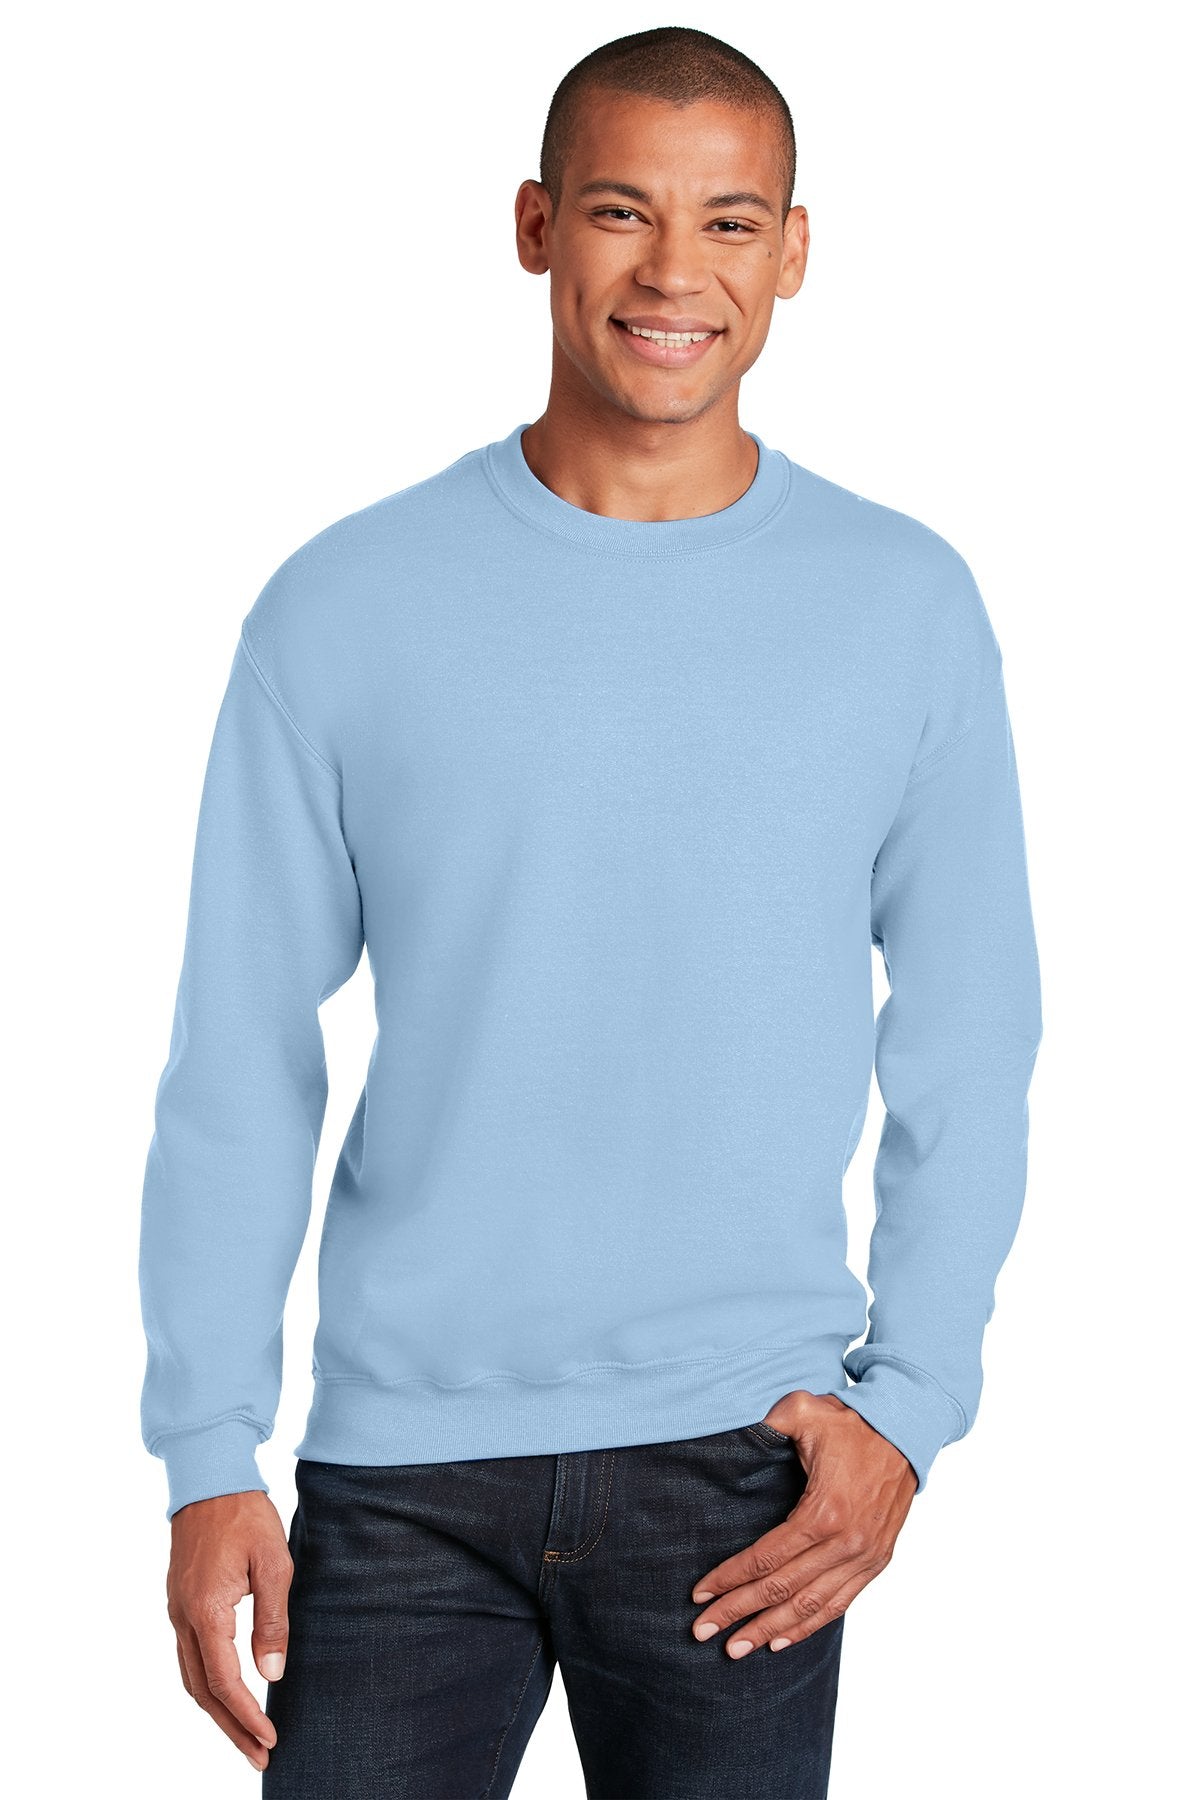 Gildan Light Blue 18000 custom logo sweatshirts embroidered